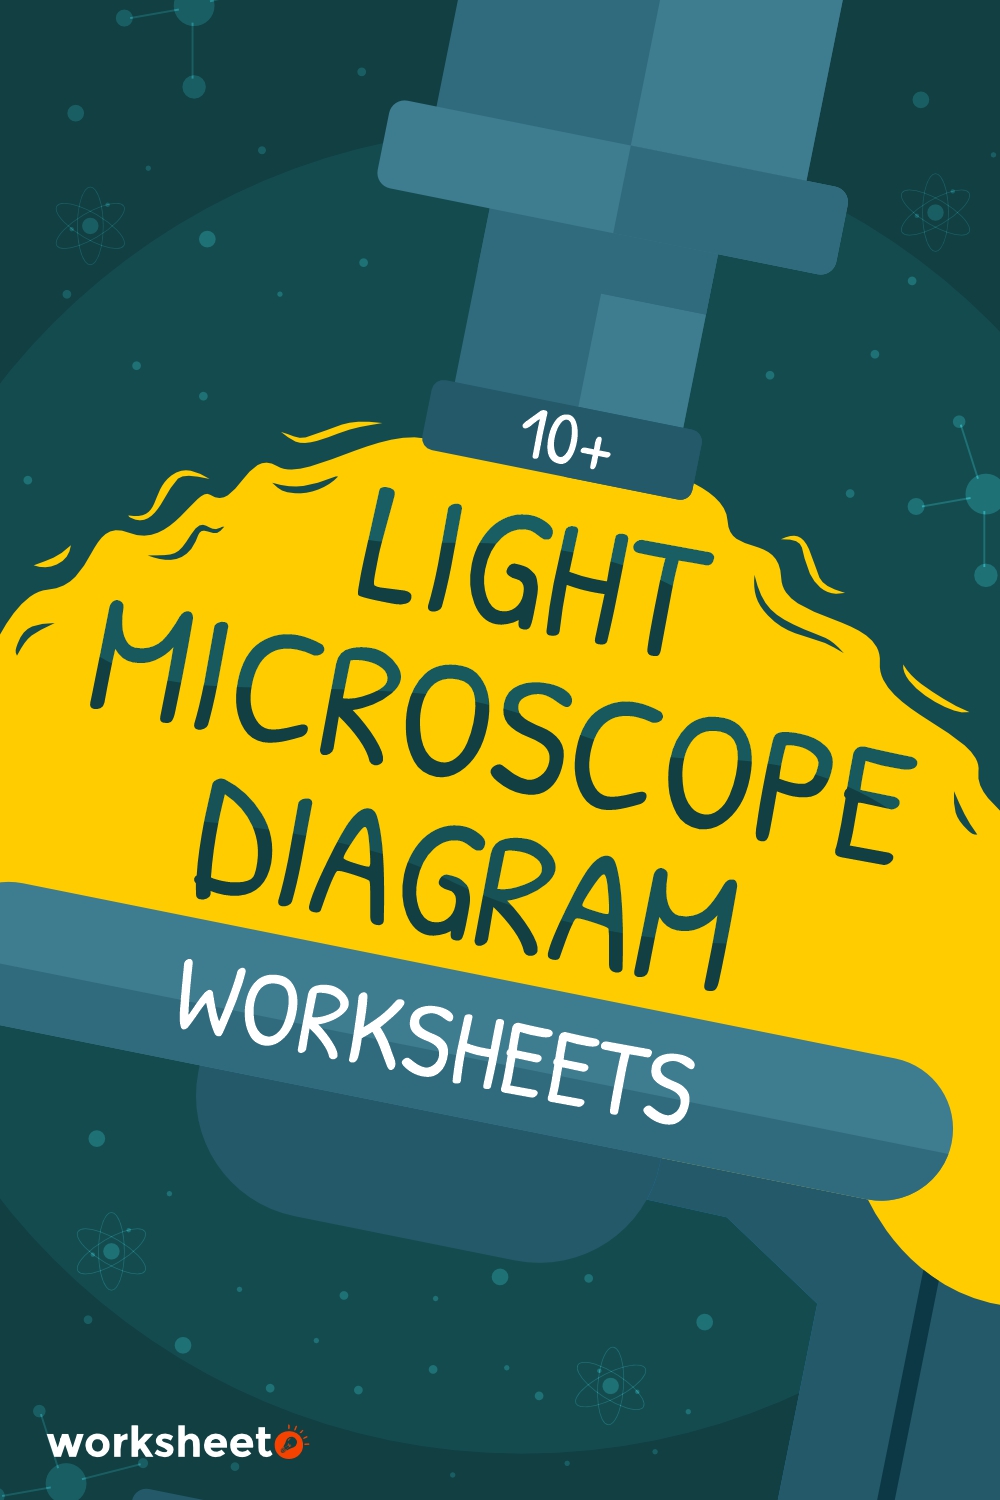 13 Images of Light Microscope Diagram Worksheet